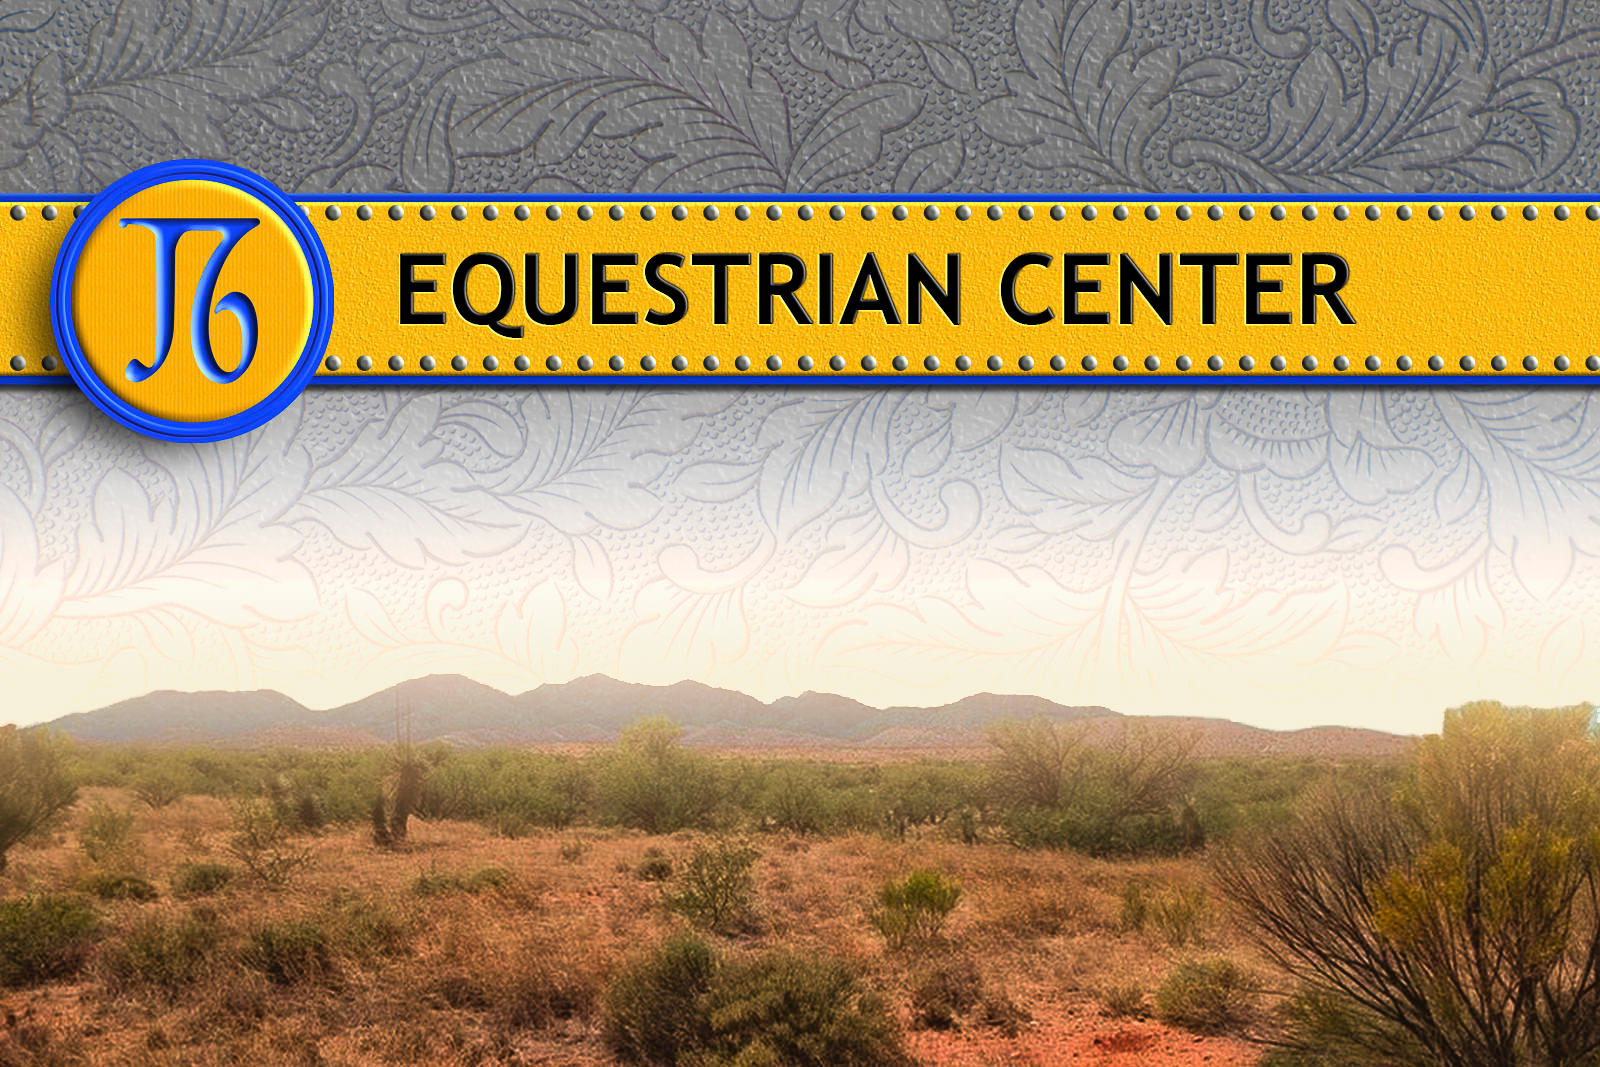 J6 Equestrian Center, Benson Arizona